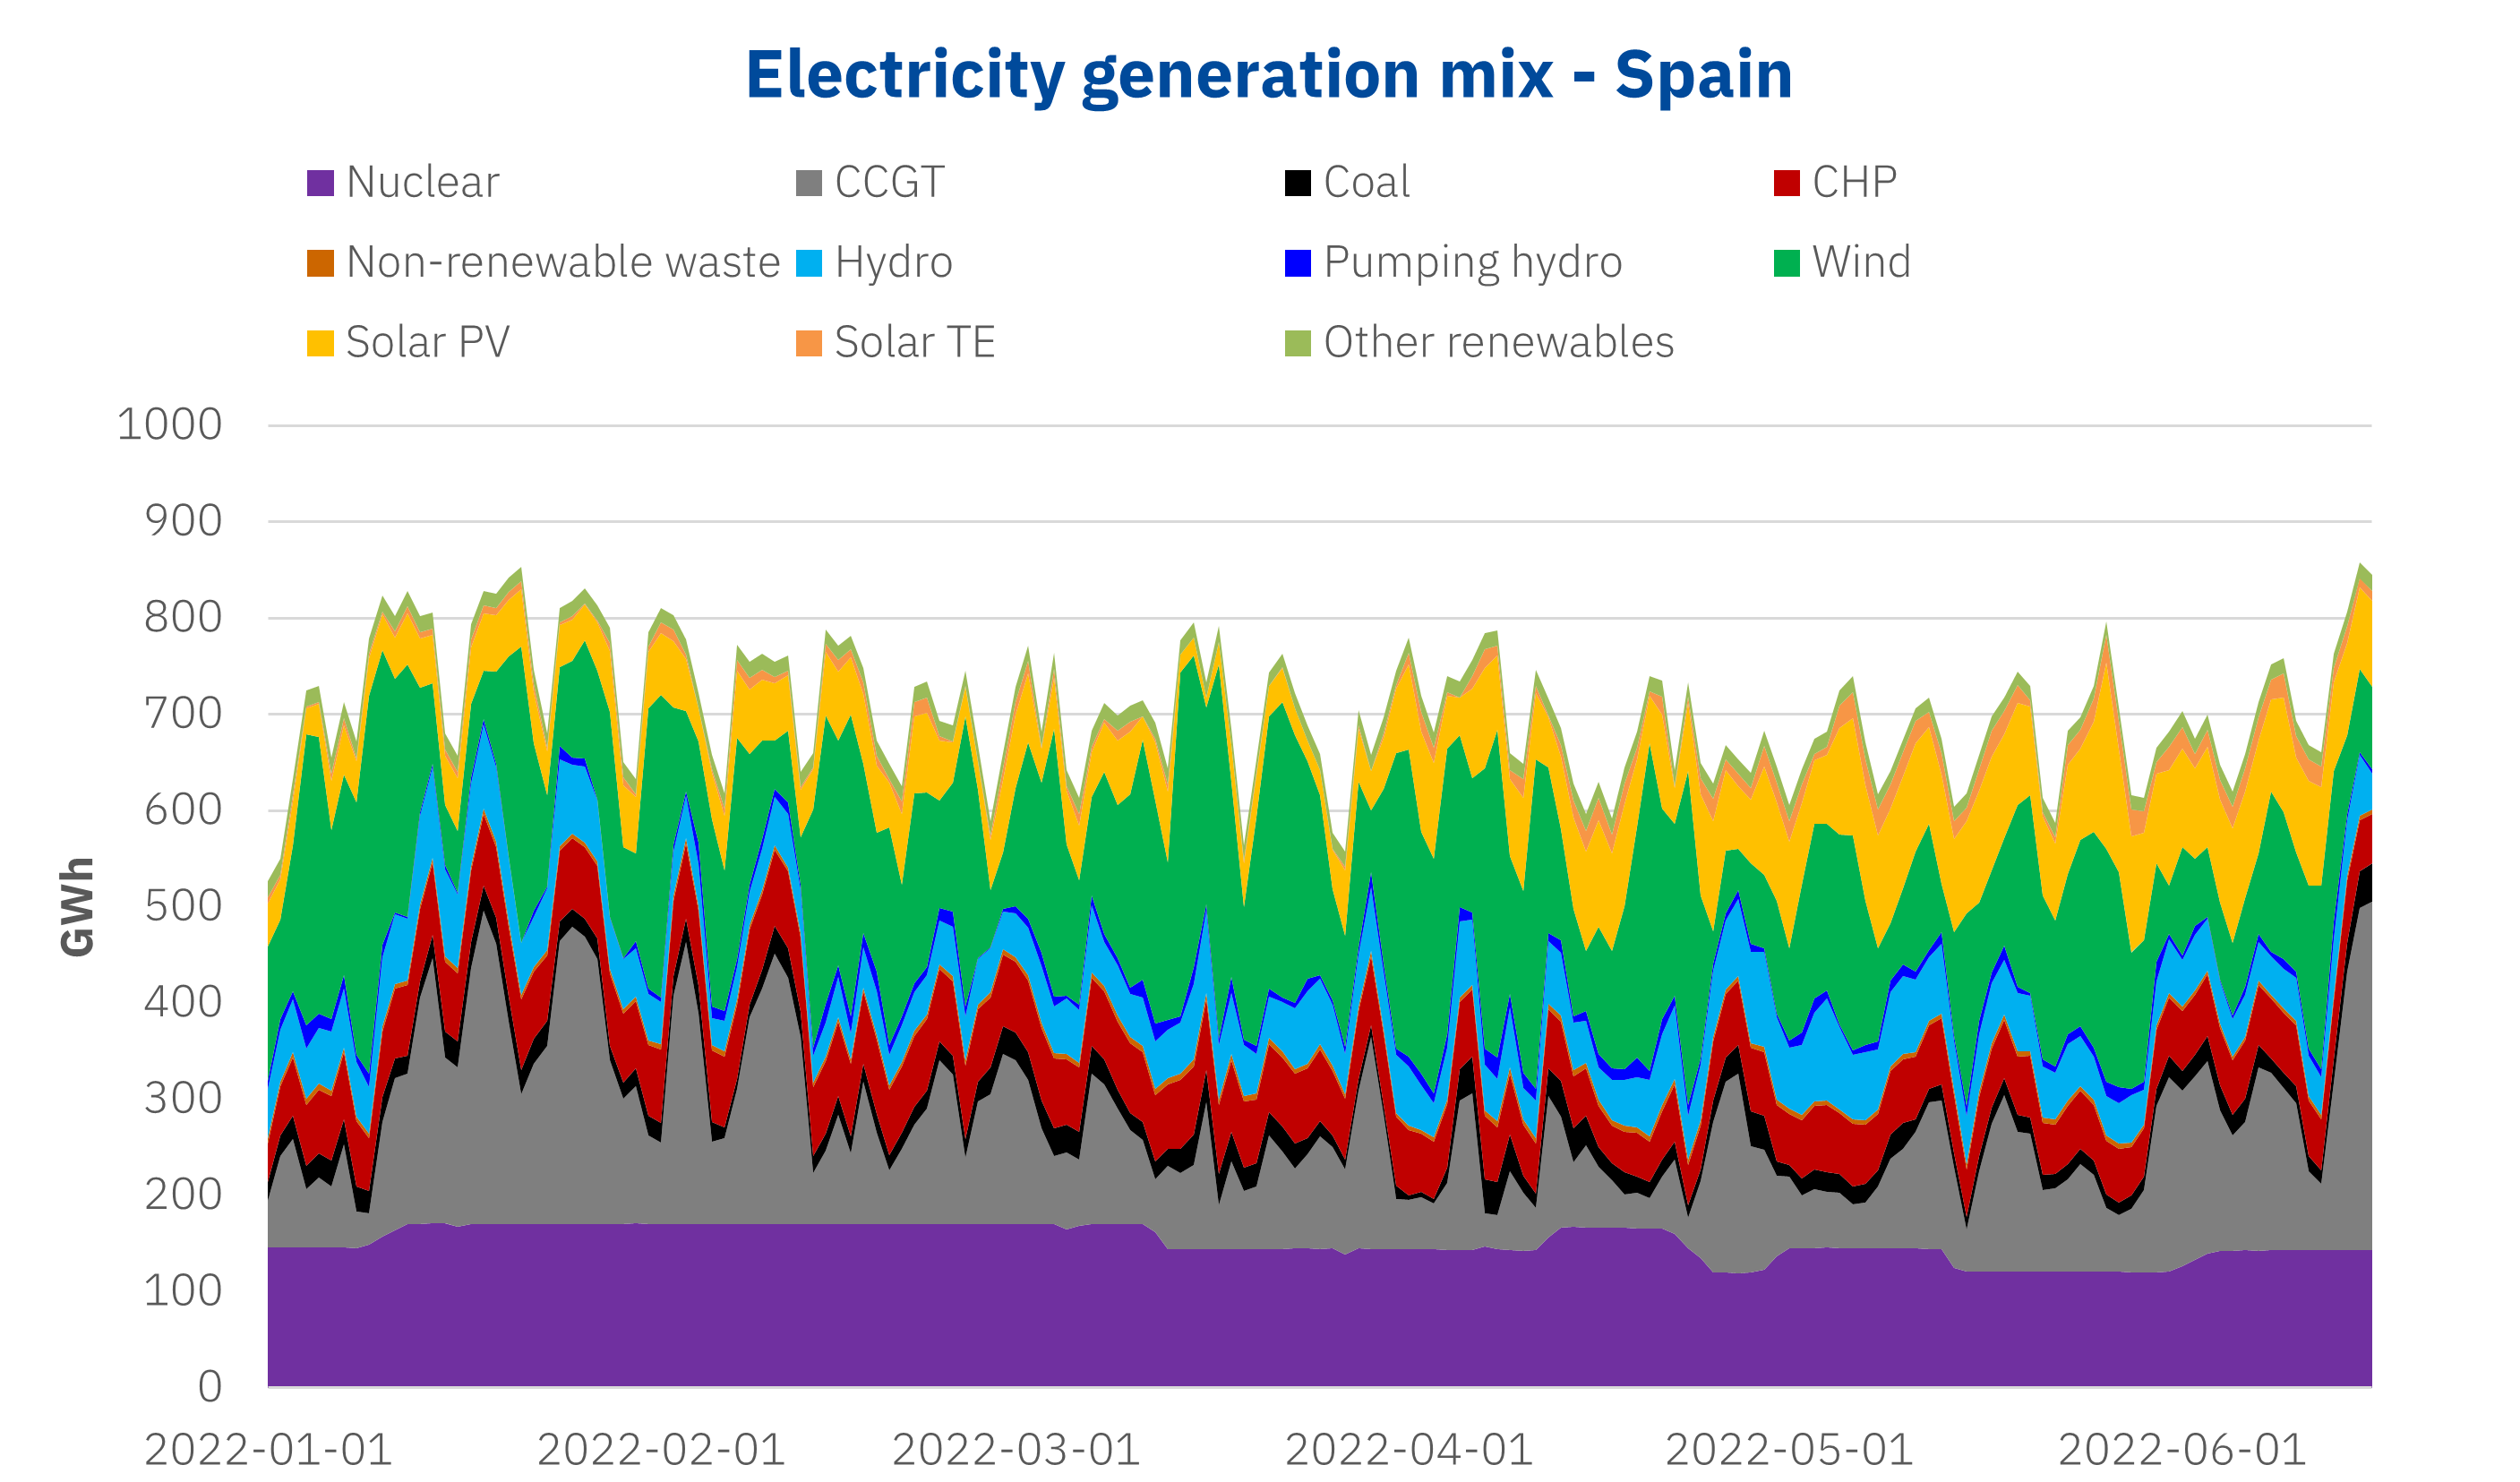 AleaSoft - Electricity generation mix Spain